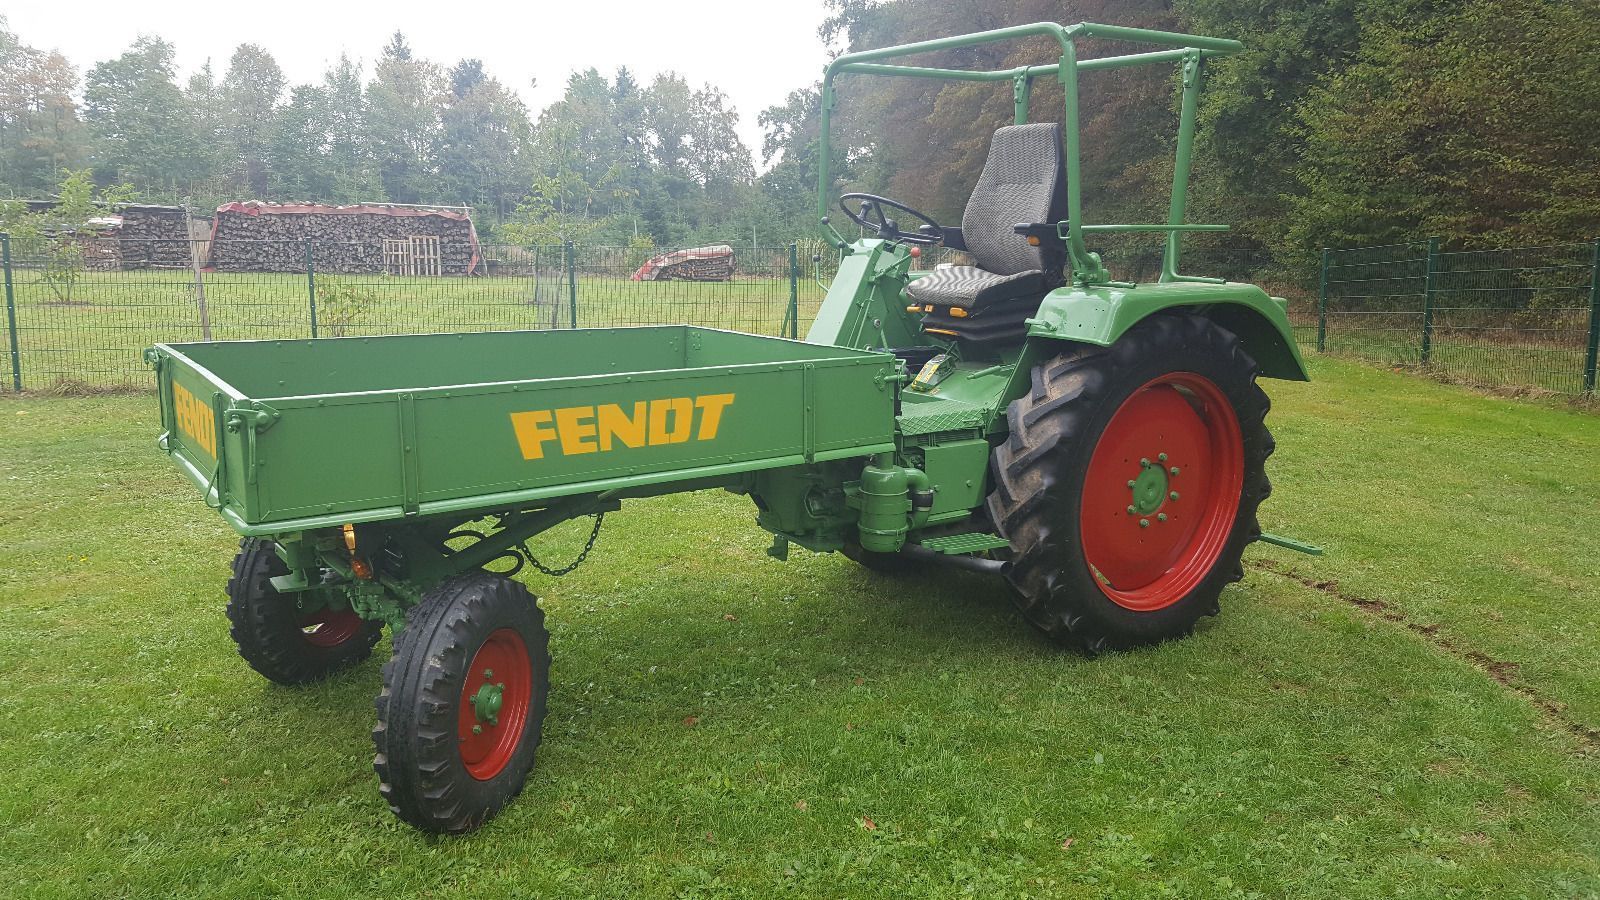  Fendt Hintergrundbild 1600x900. Fendt GT 250 Traktor Schlepper Bulldog Geräteträger Pritsche. eBay. Traktor schlepper, Fendt, Fendt traktor